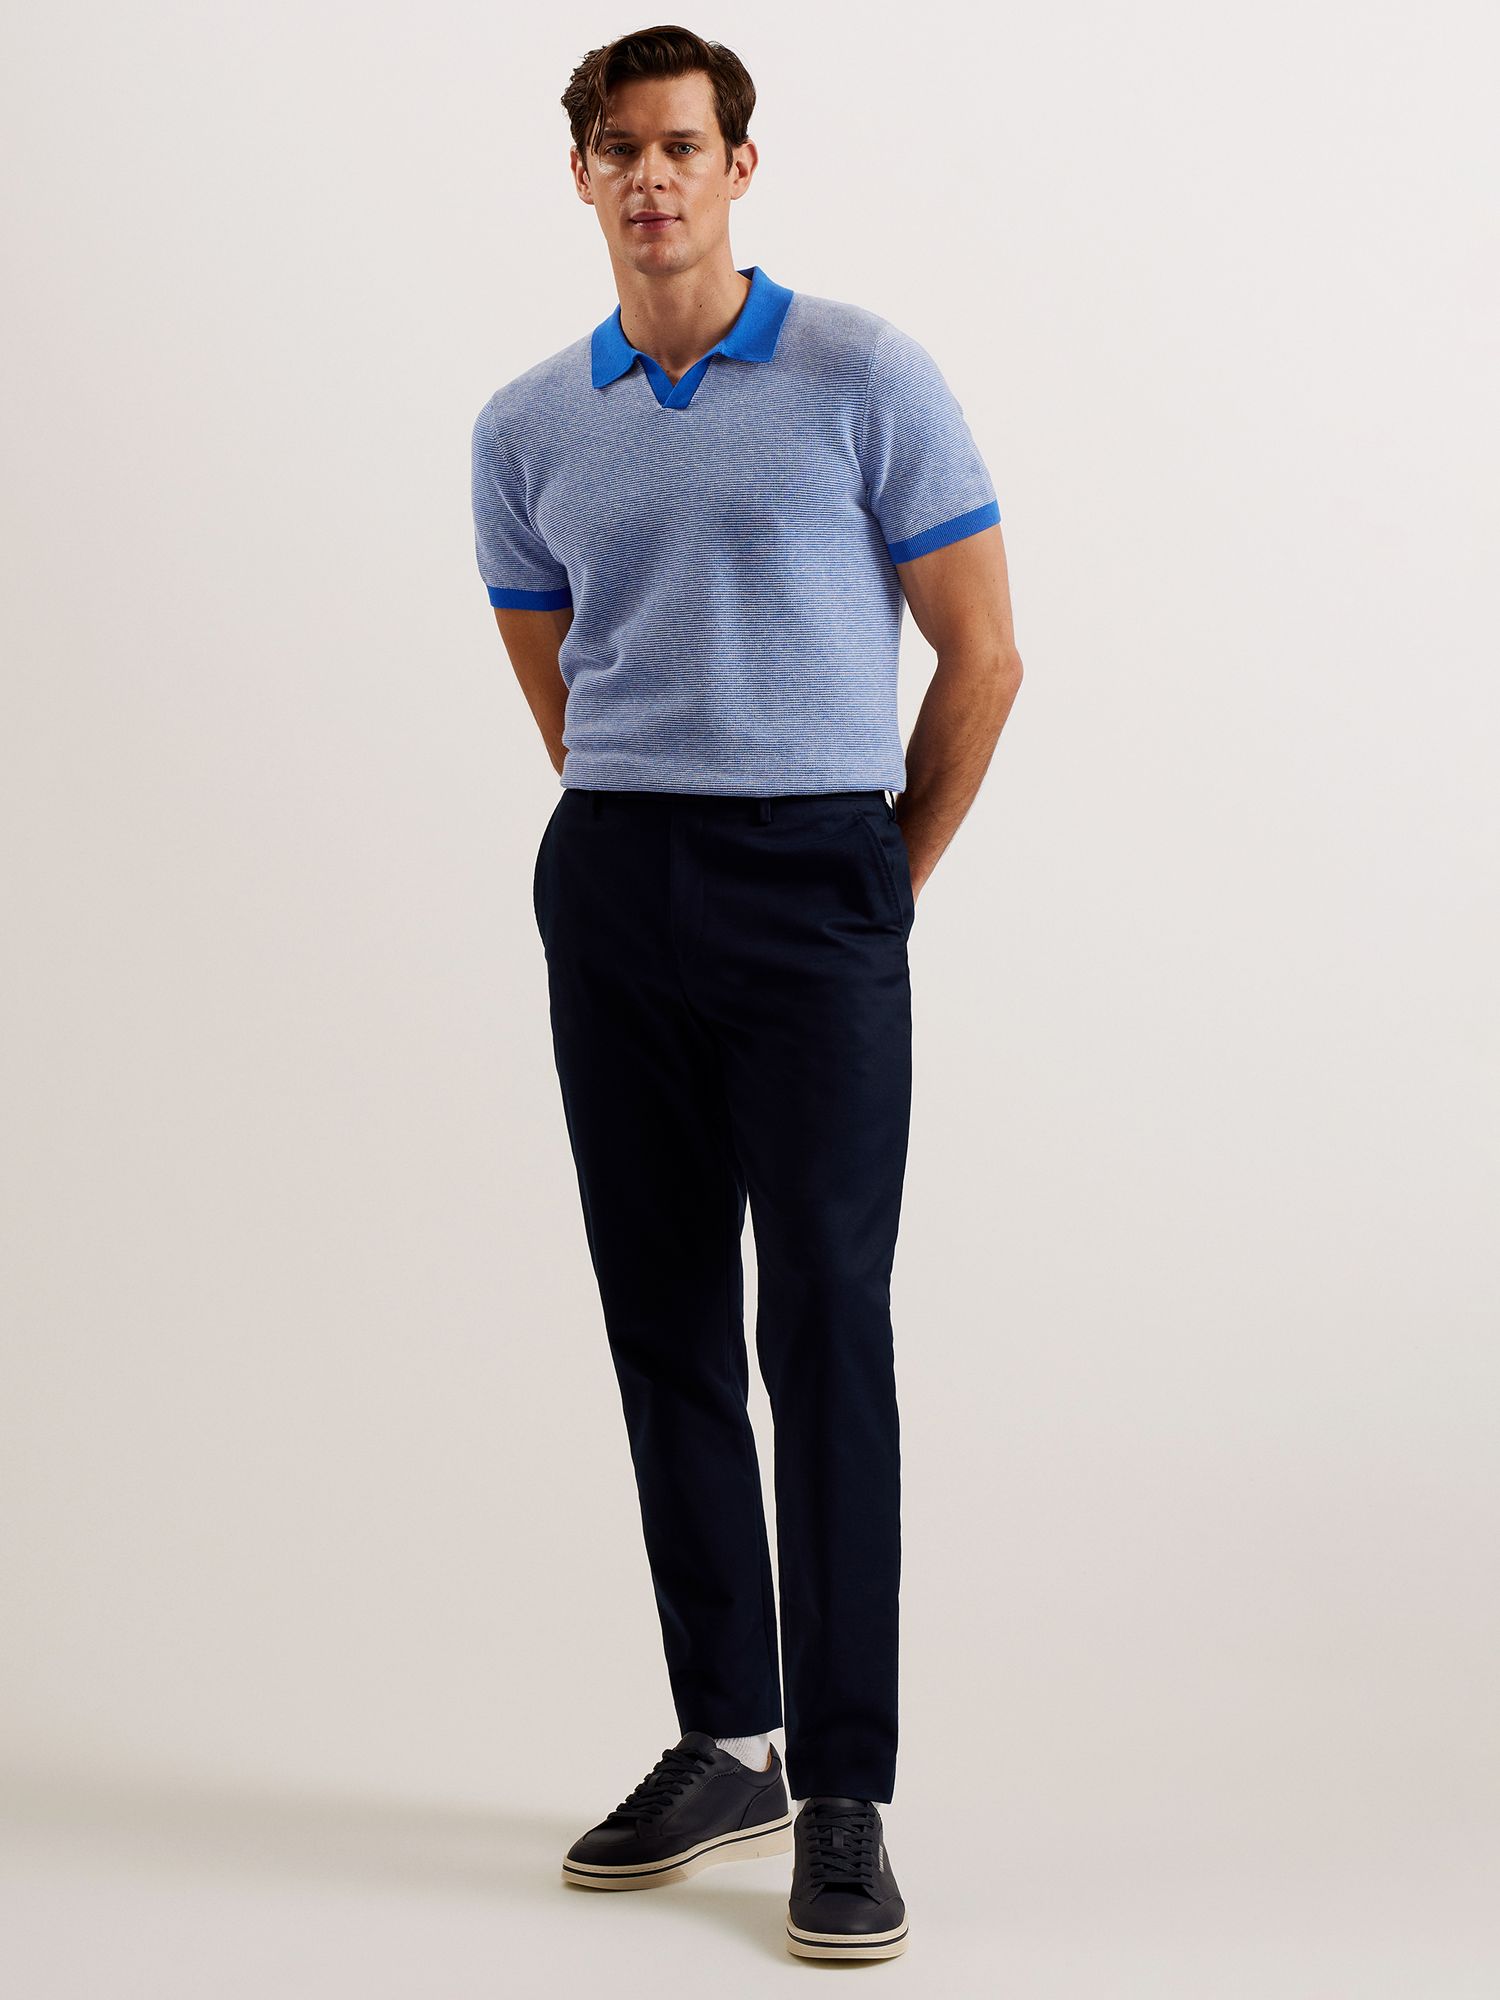 Ted Baker Wulder Regular Short Sleeve Open Neck Polo Shirt, Blue Sky, XS